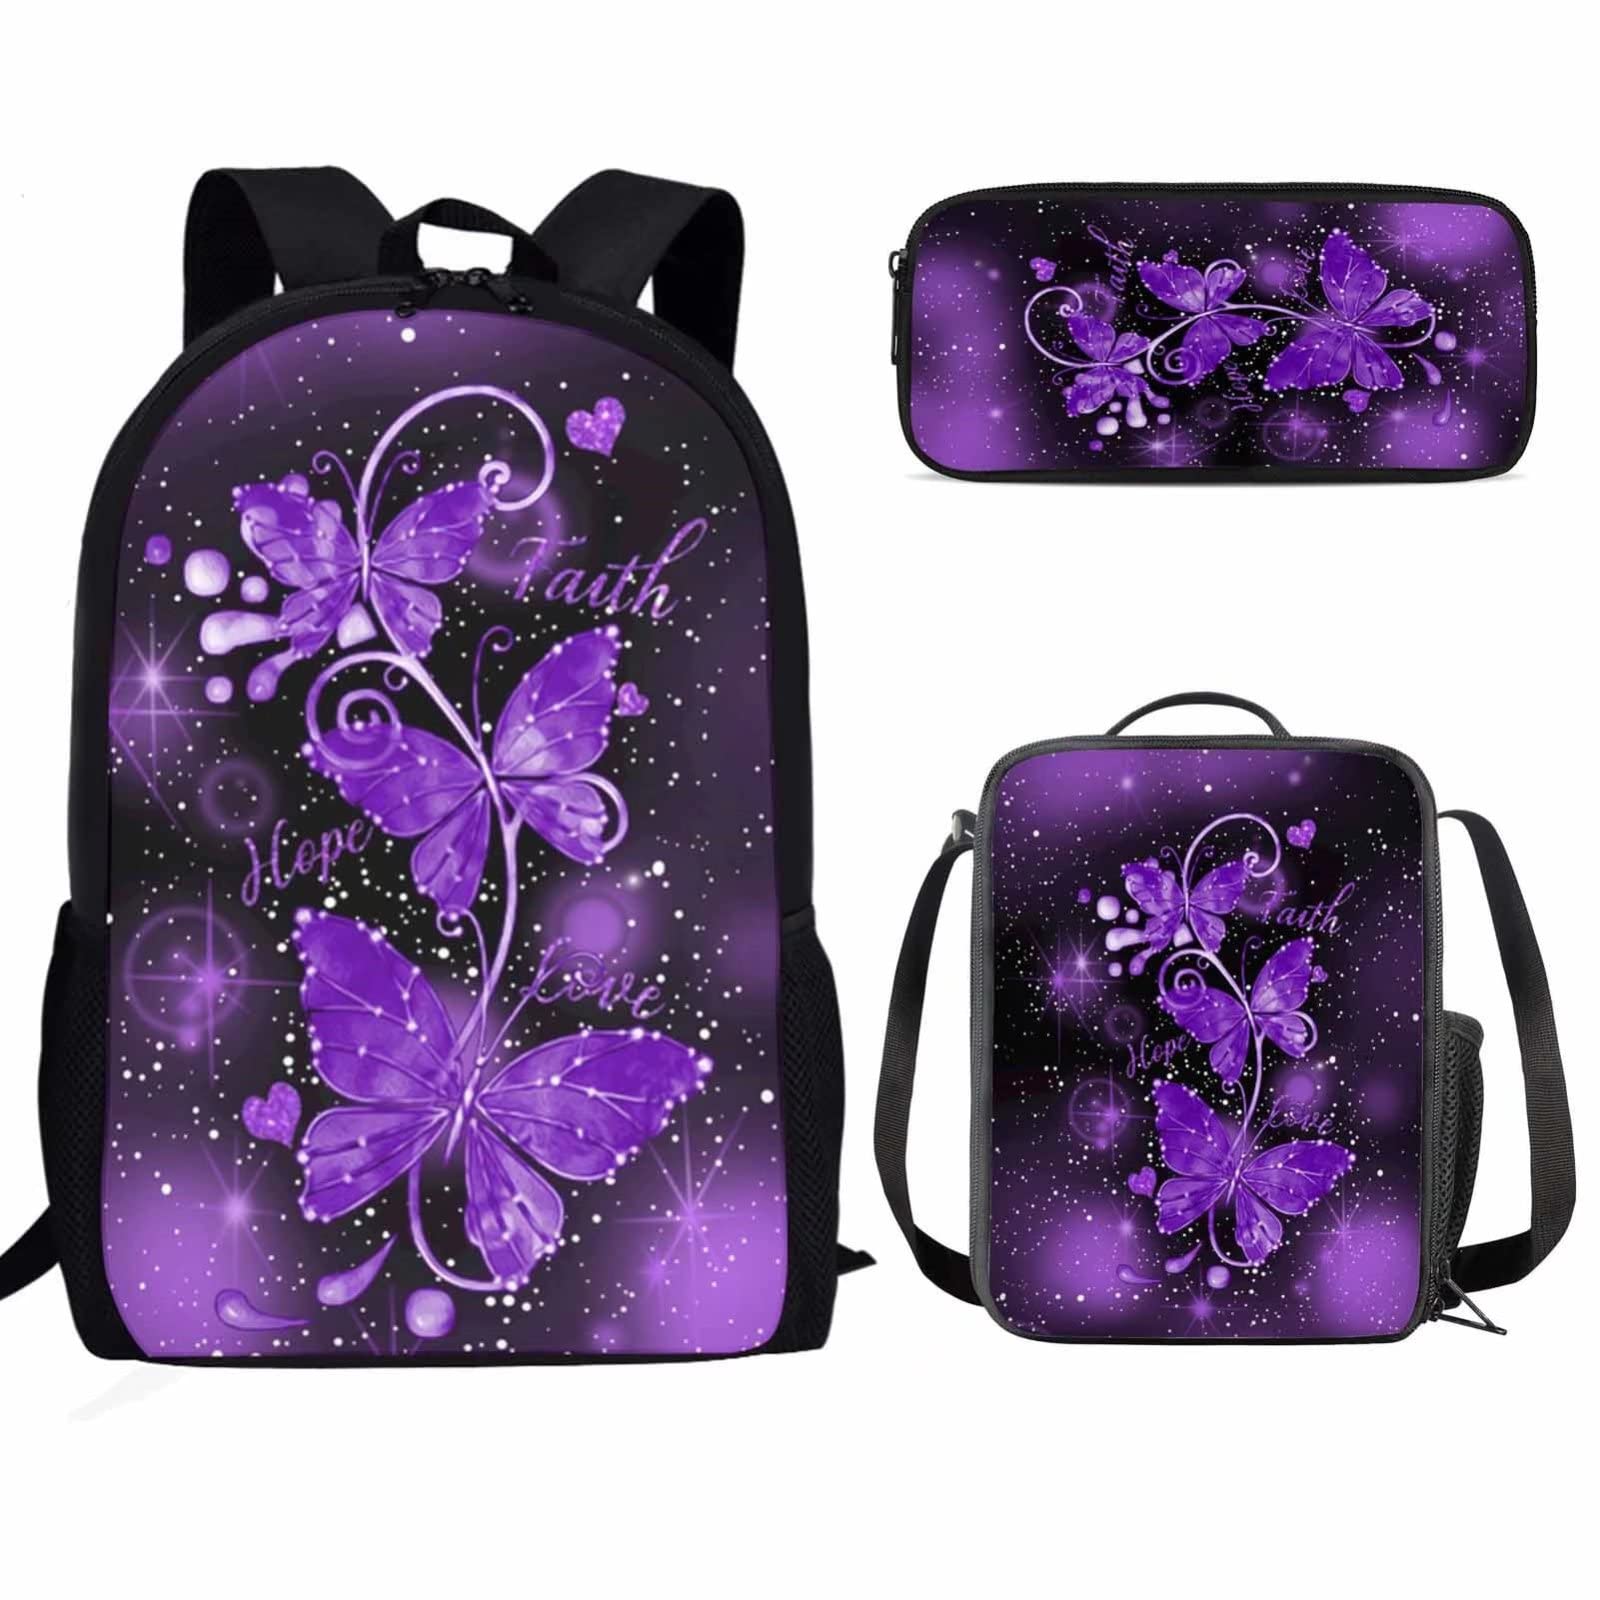 Dolyues Kids Girls Backpack School Bookbag 3pcs Sets, Purple Butterfly Hope Love Print Travel Daypack Lunchbox and Pencil Case Lightweight Rucksack